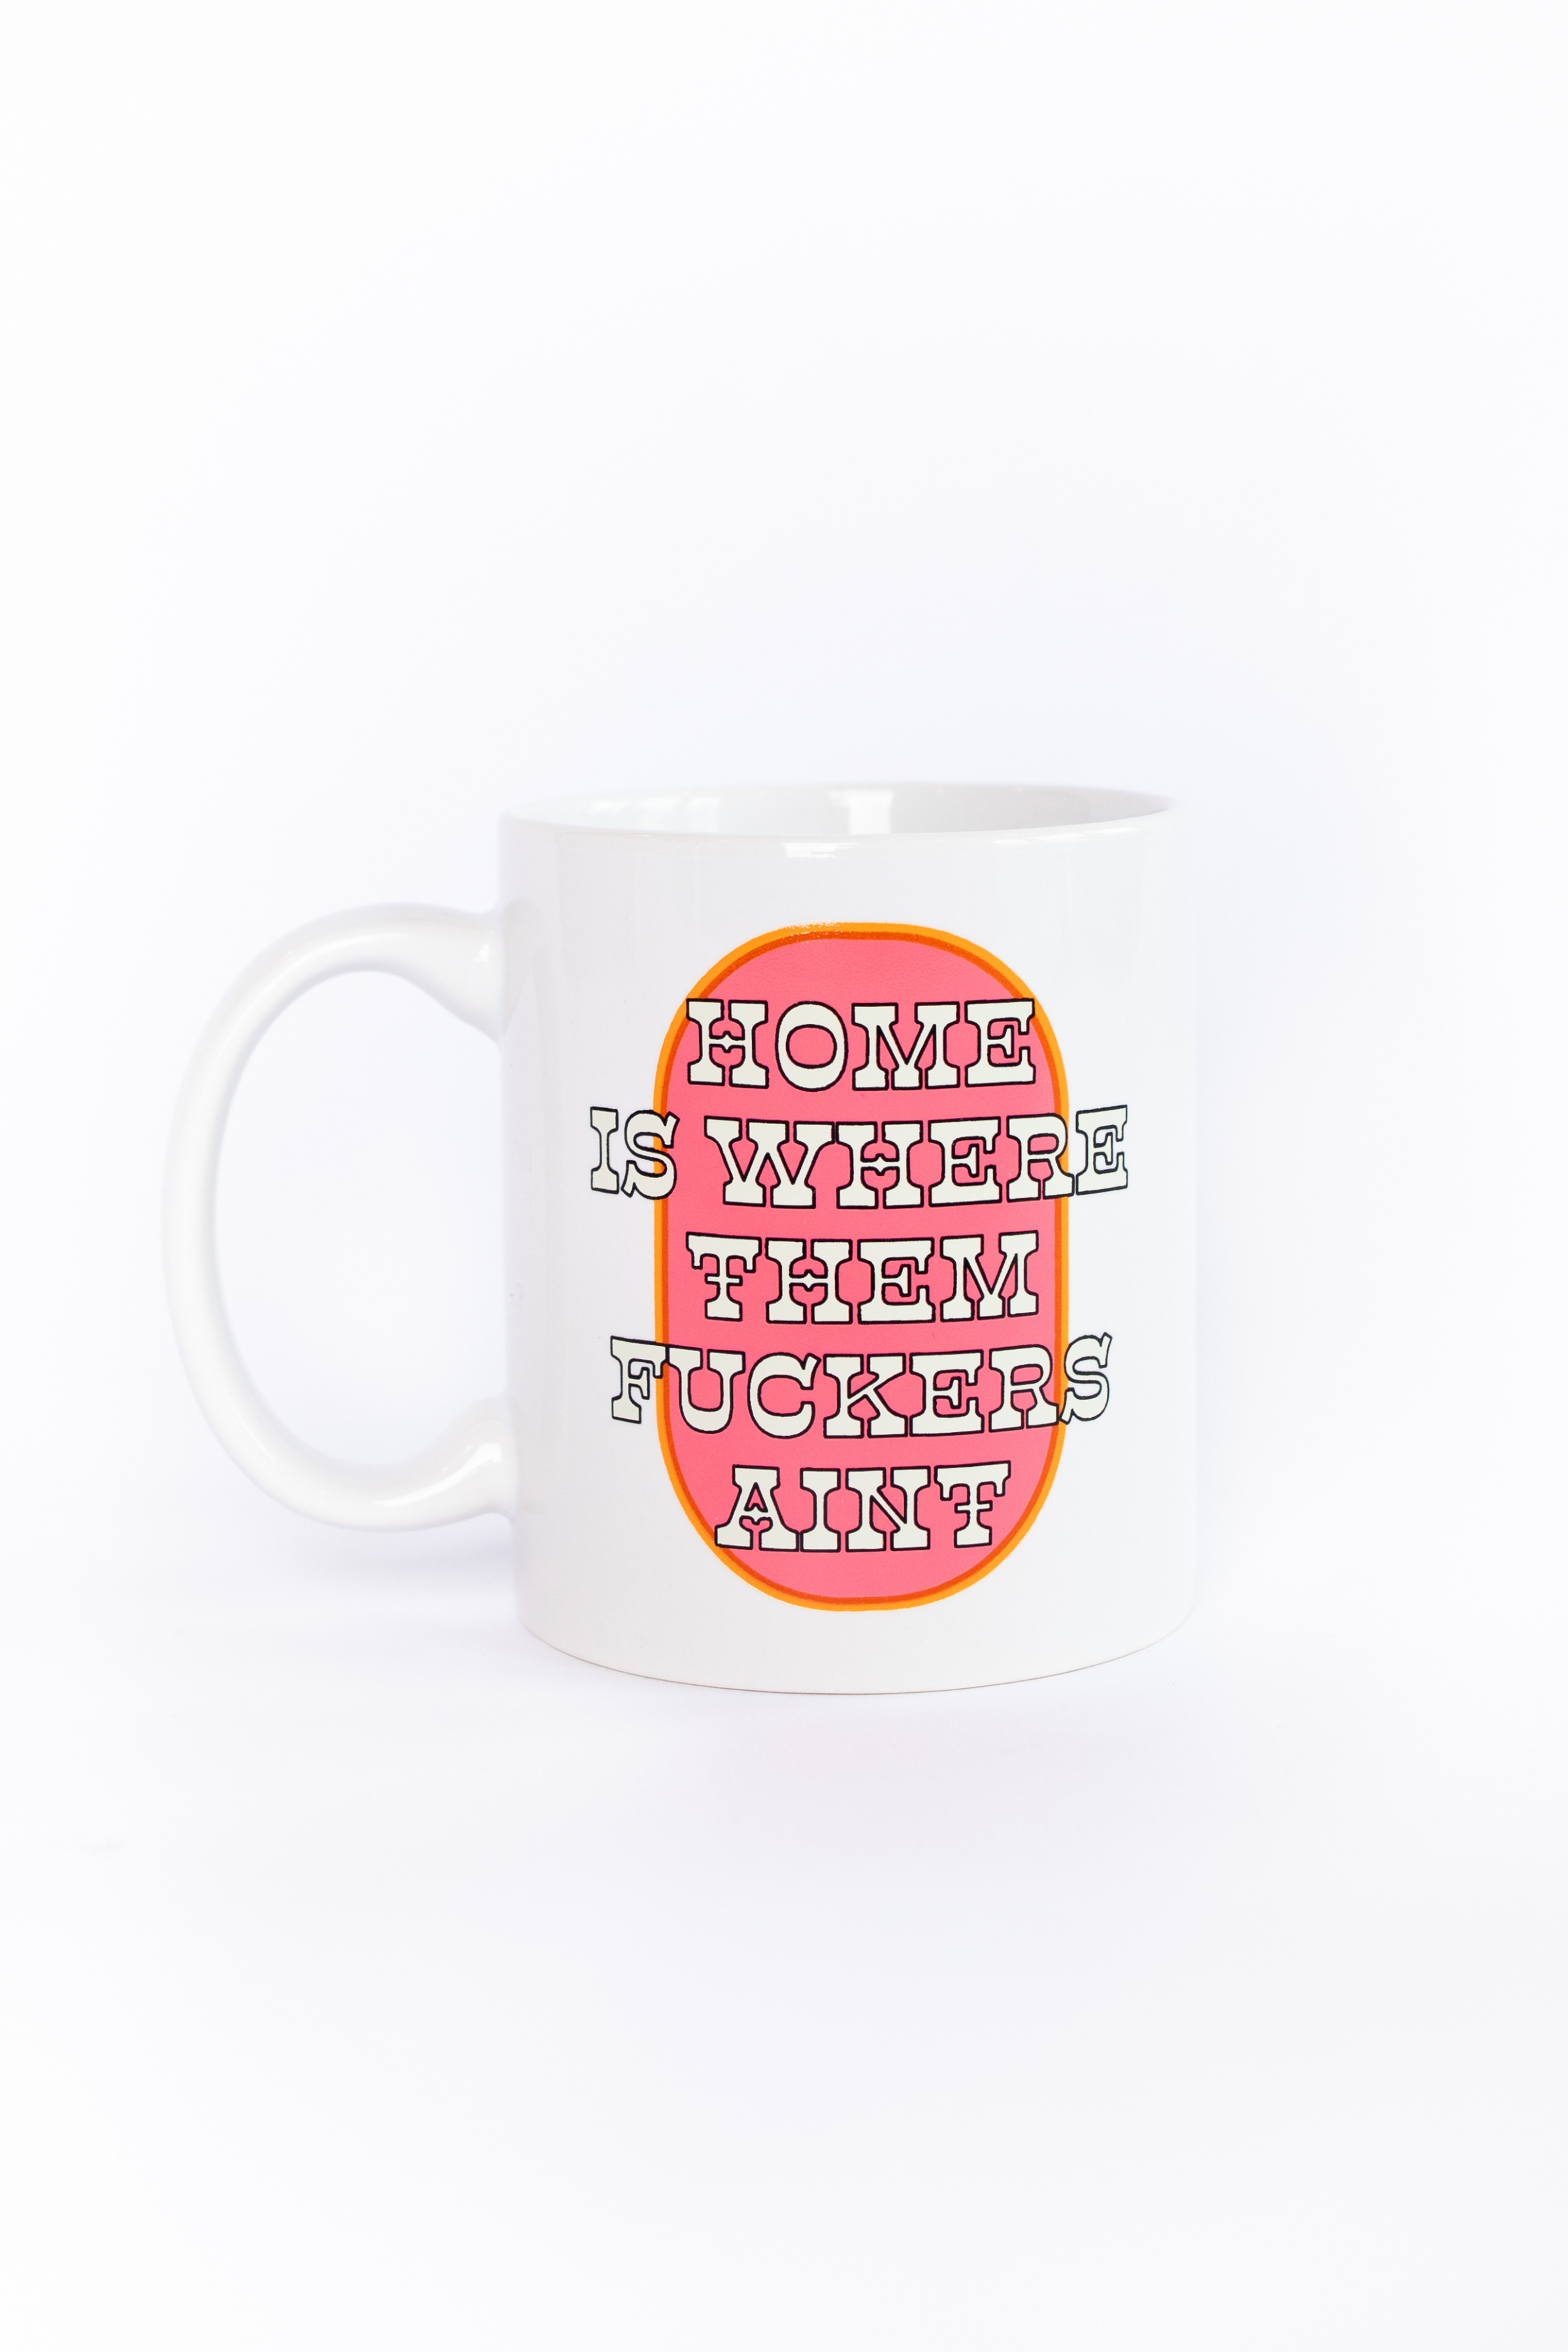 Fuck Mug by Brightside